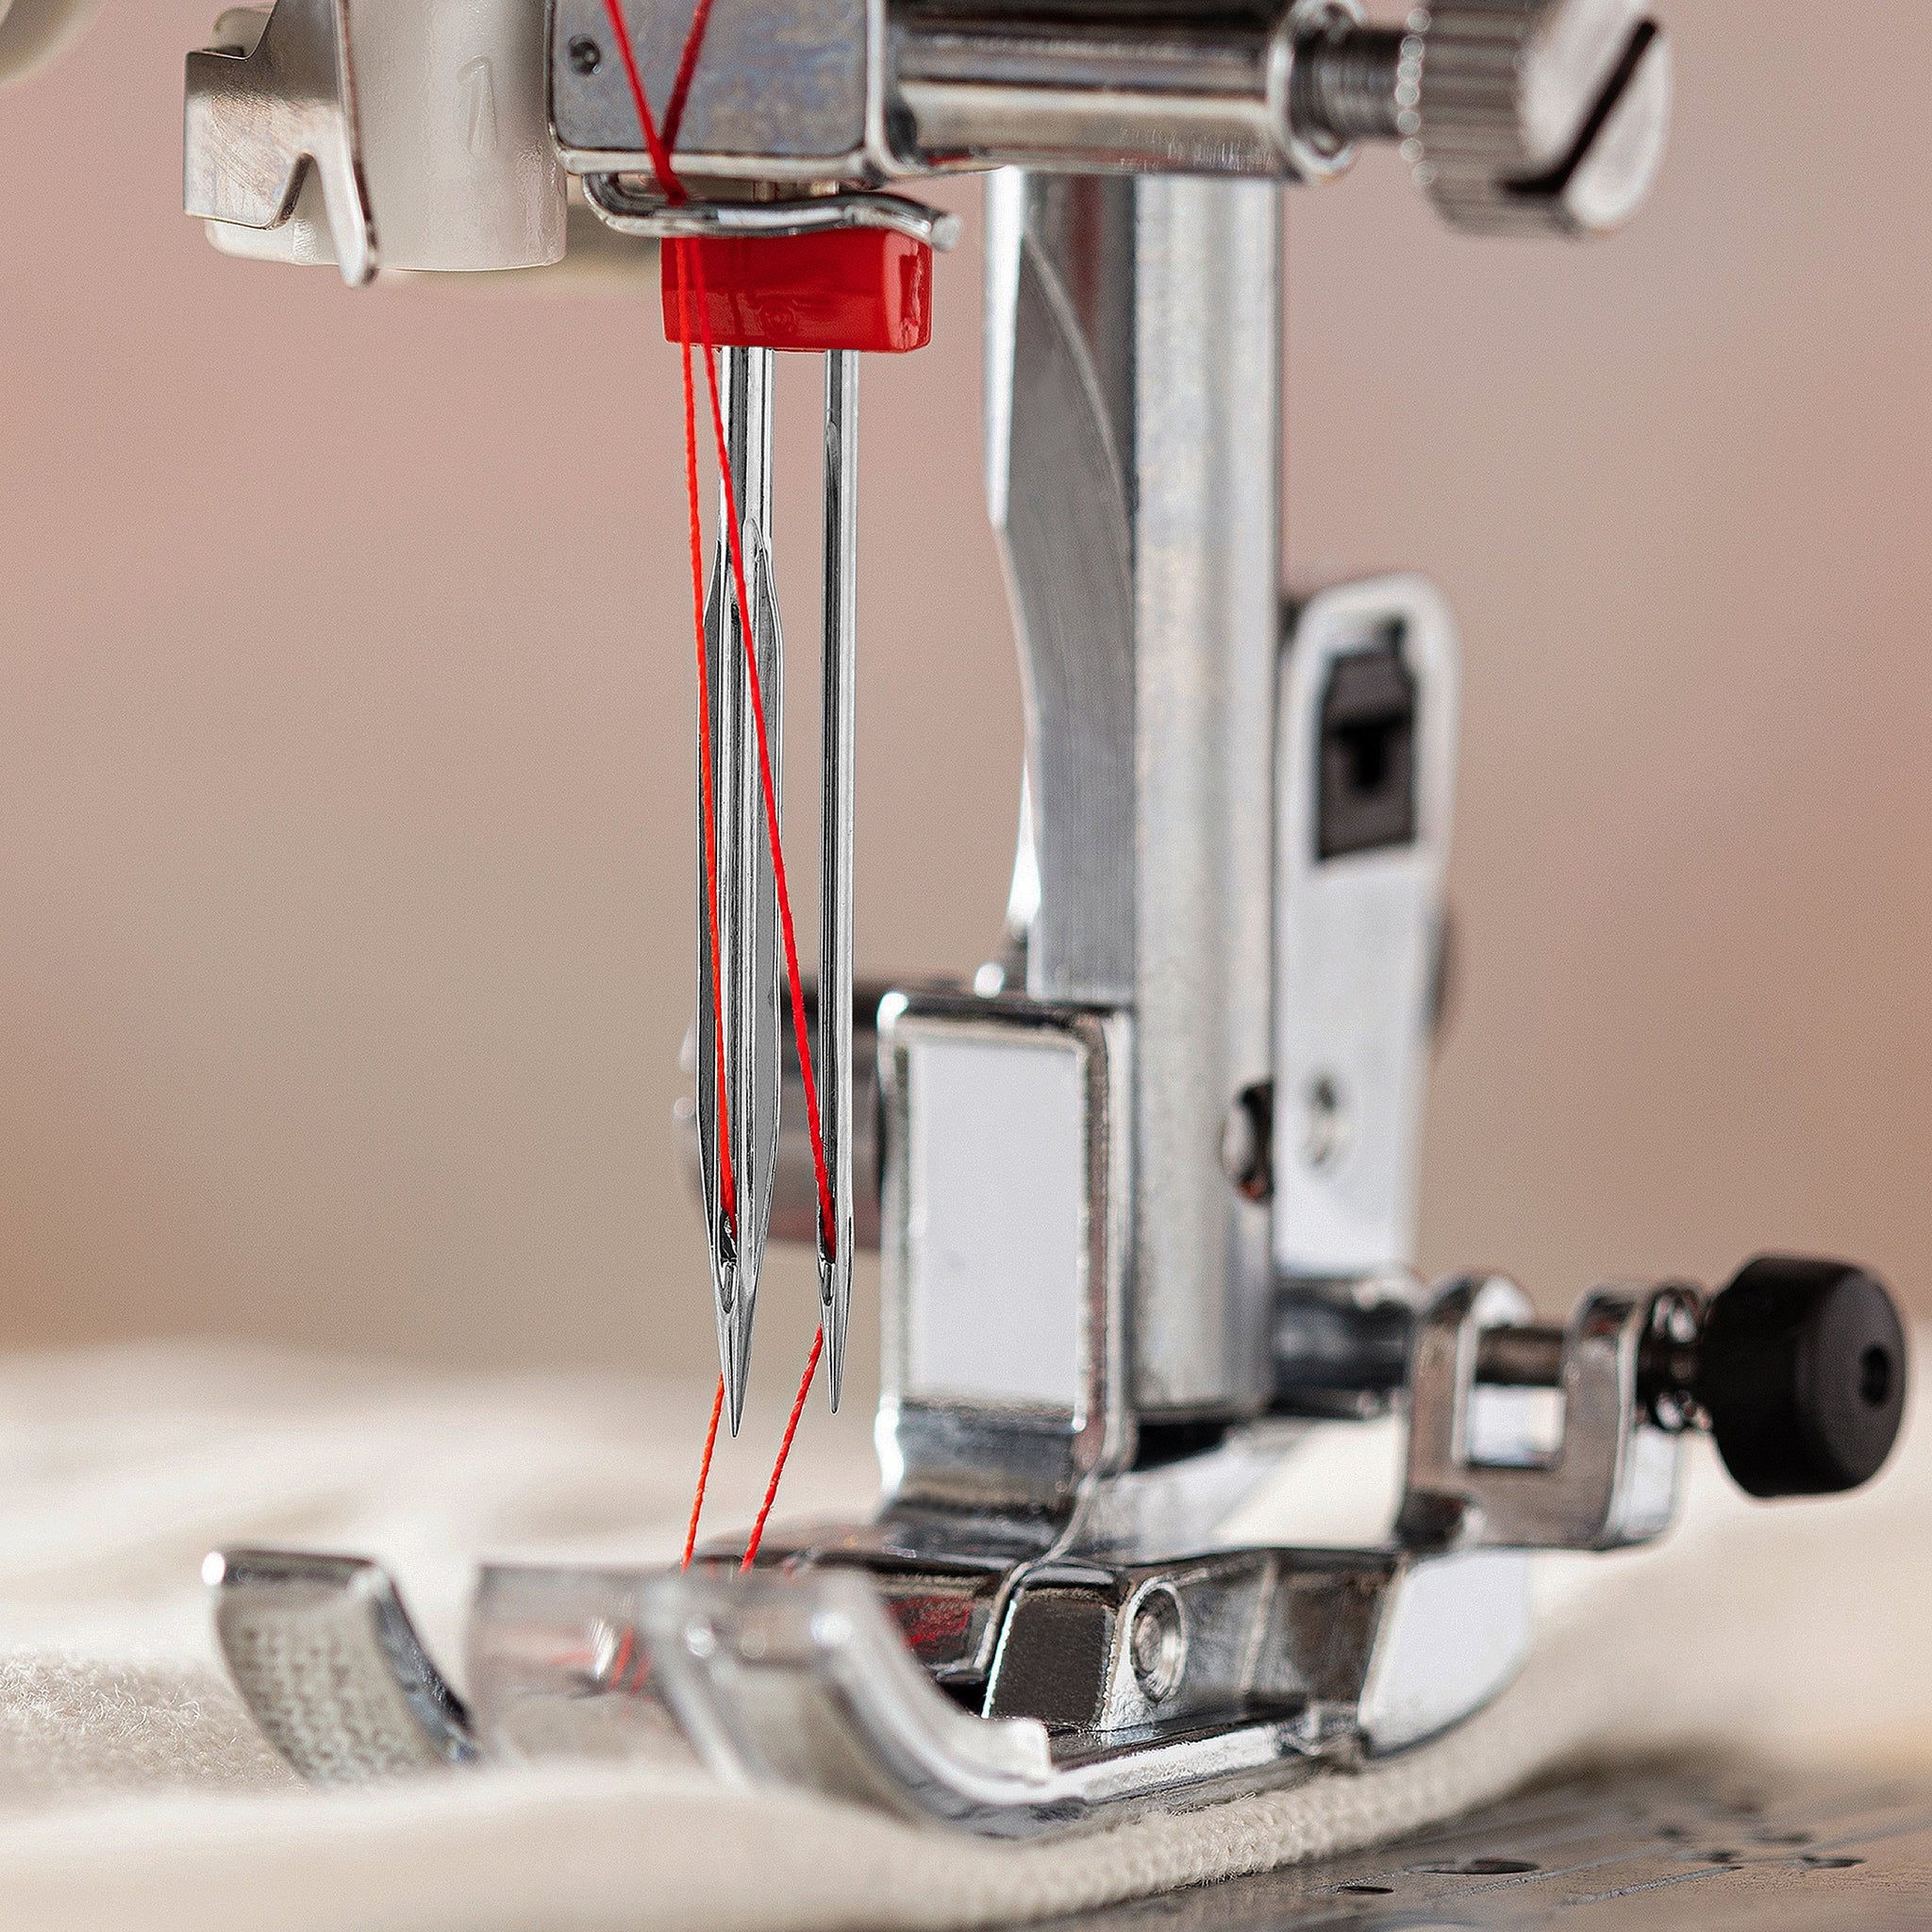 Schmetz Sewing Machine Double Hemstitch Needle - Machine Needles - Pins &  Needles - Notions